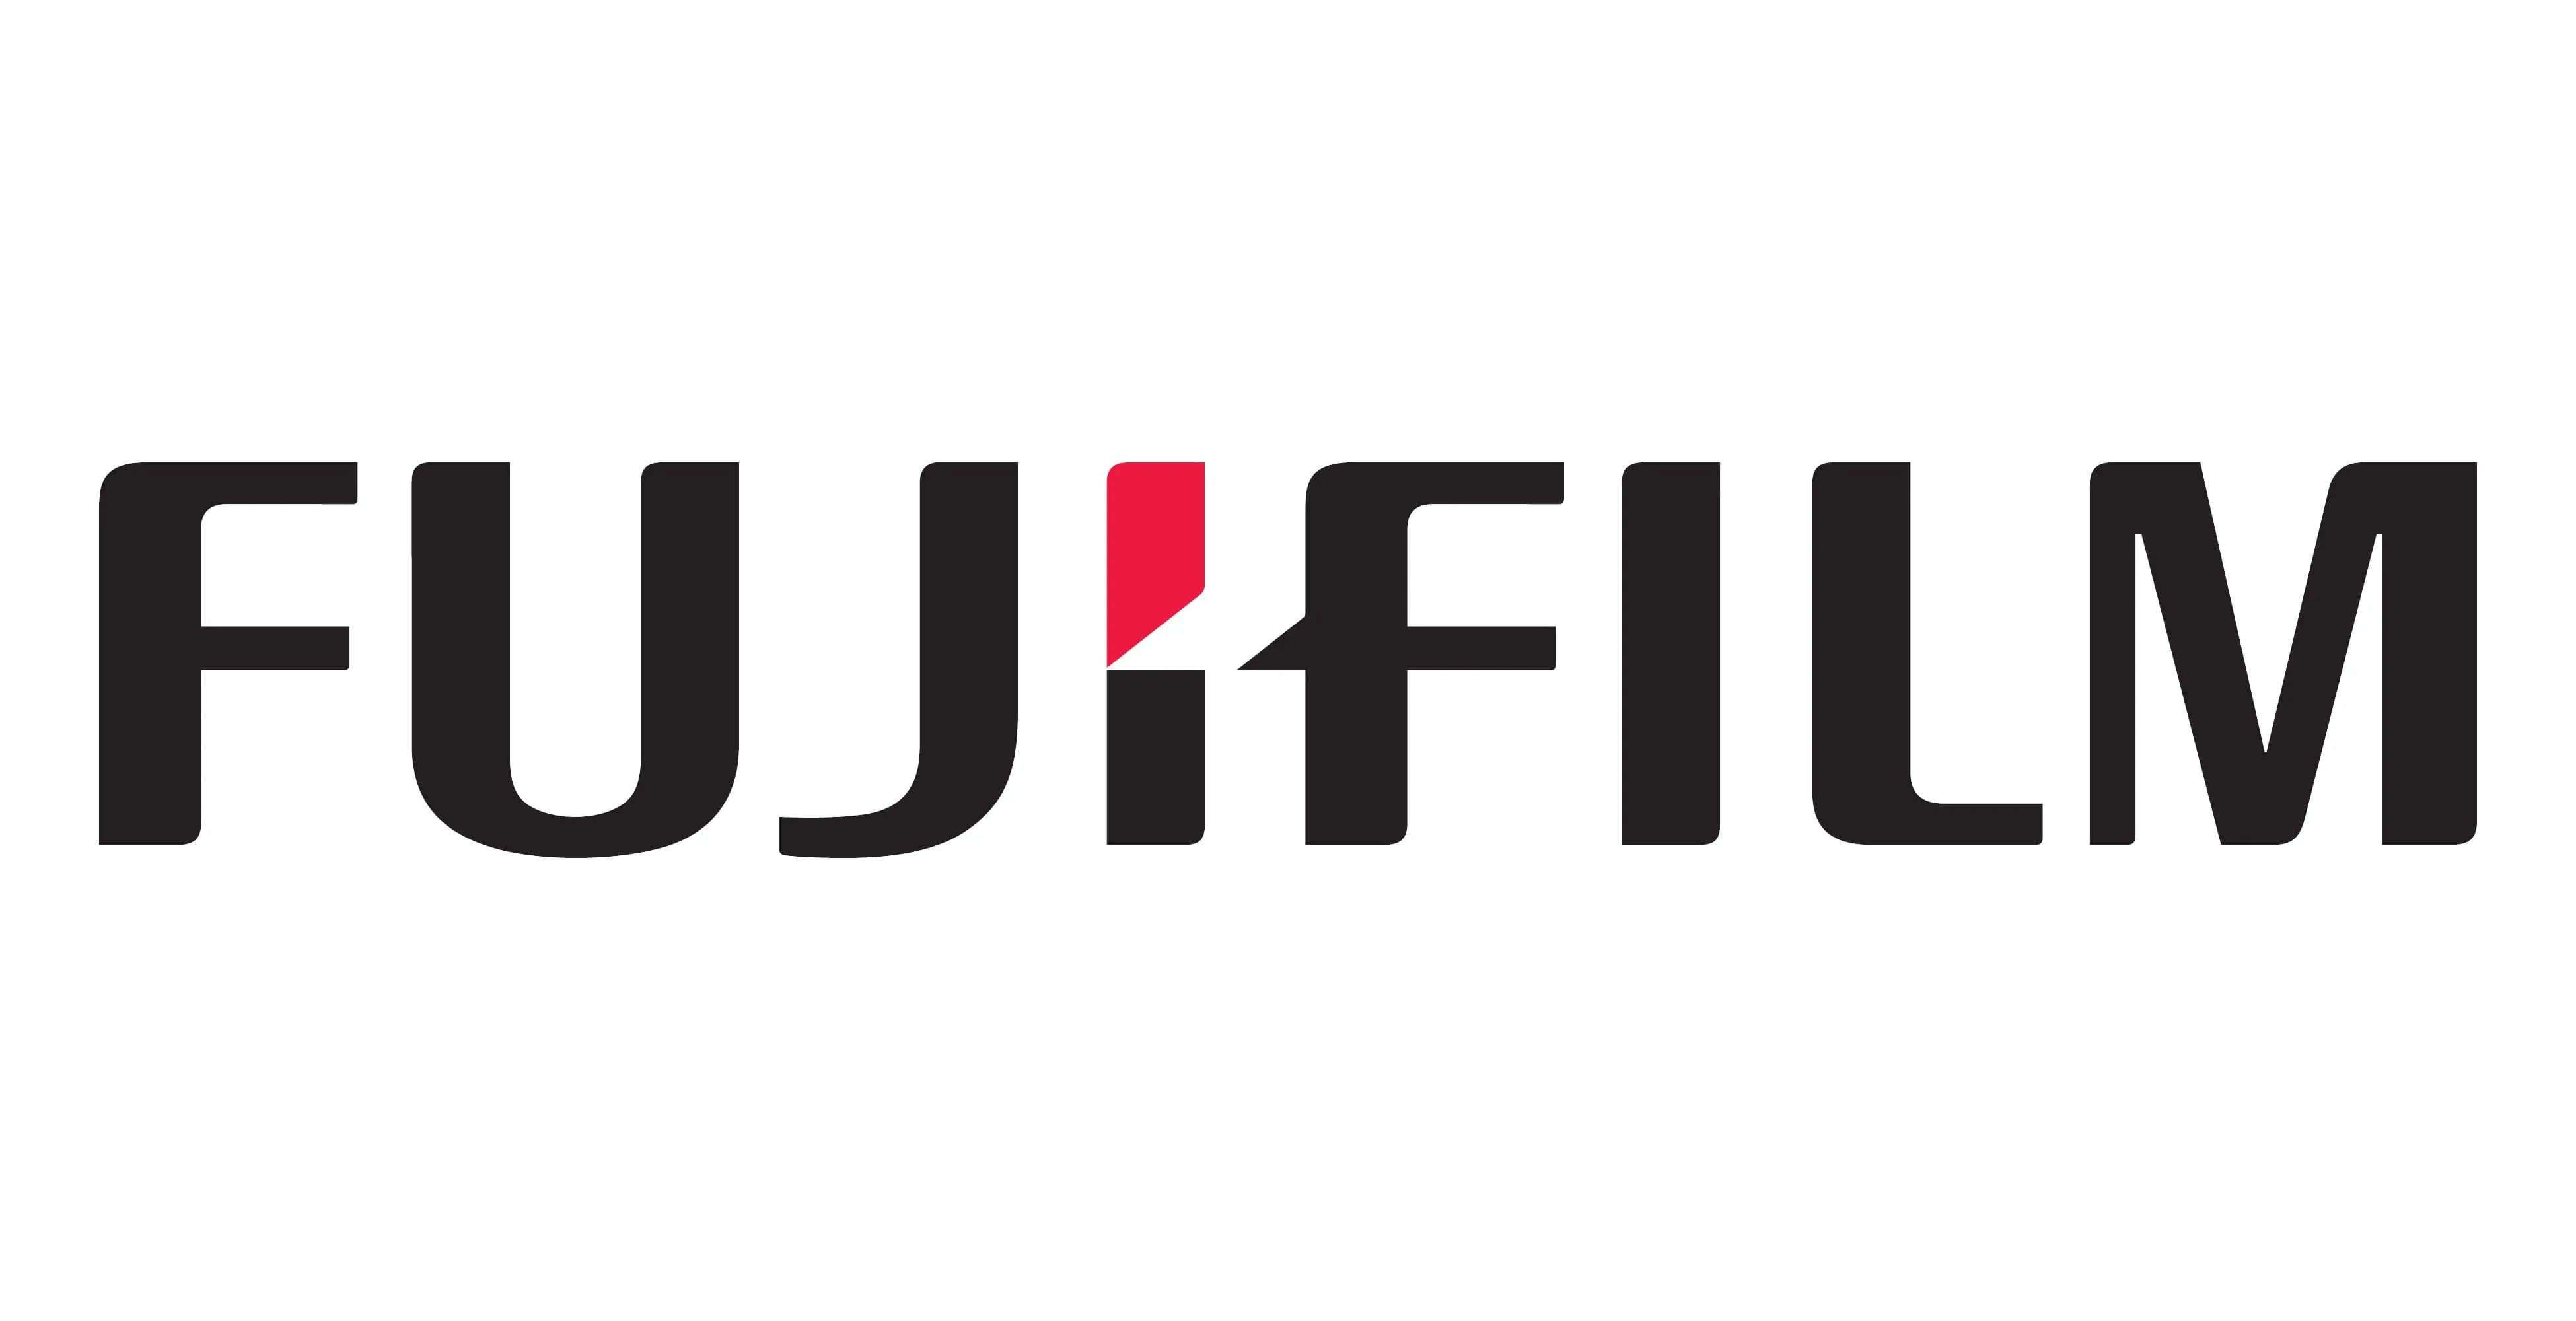 Fujifilm-logo.webp